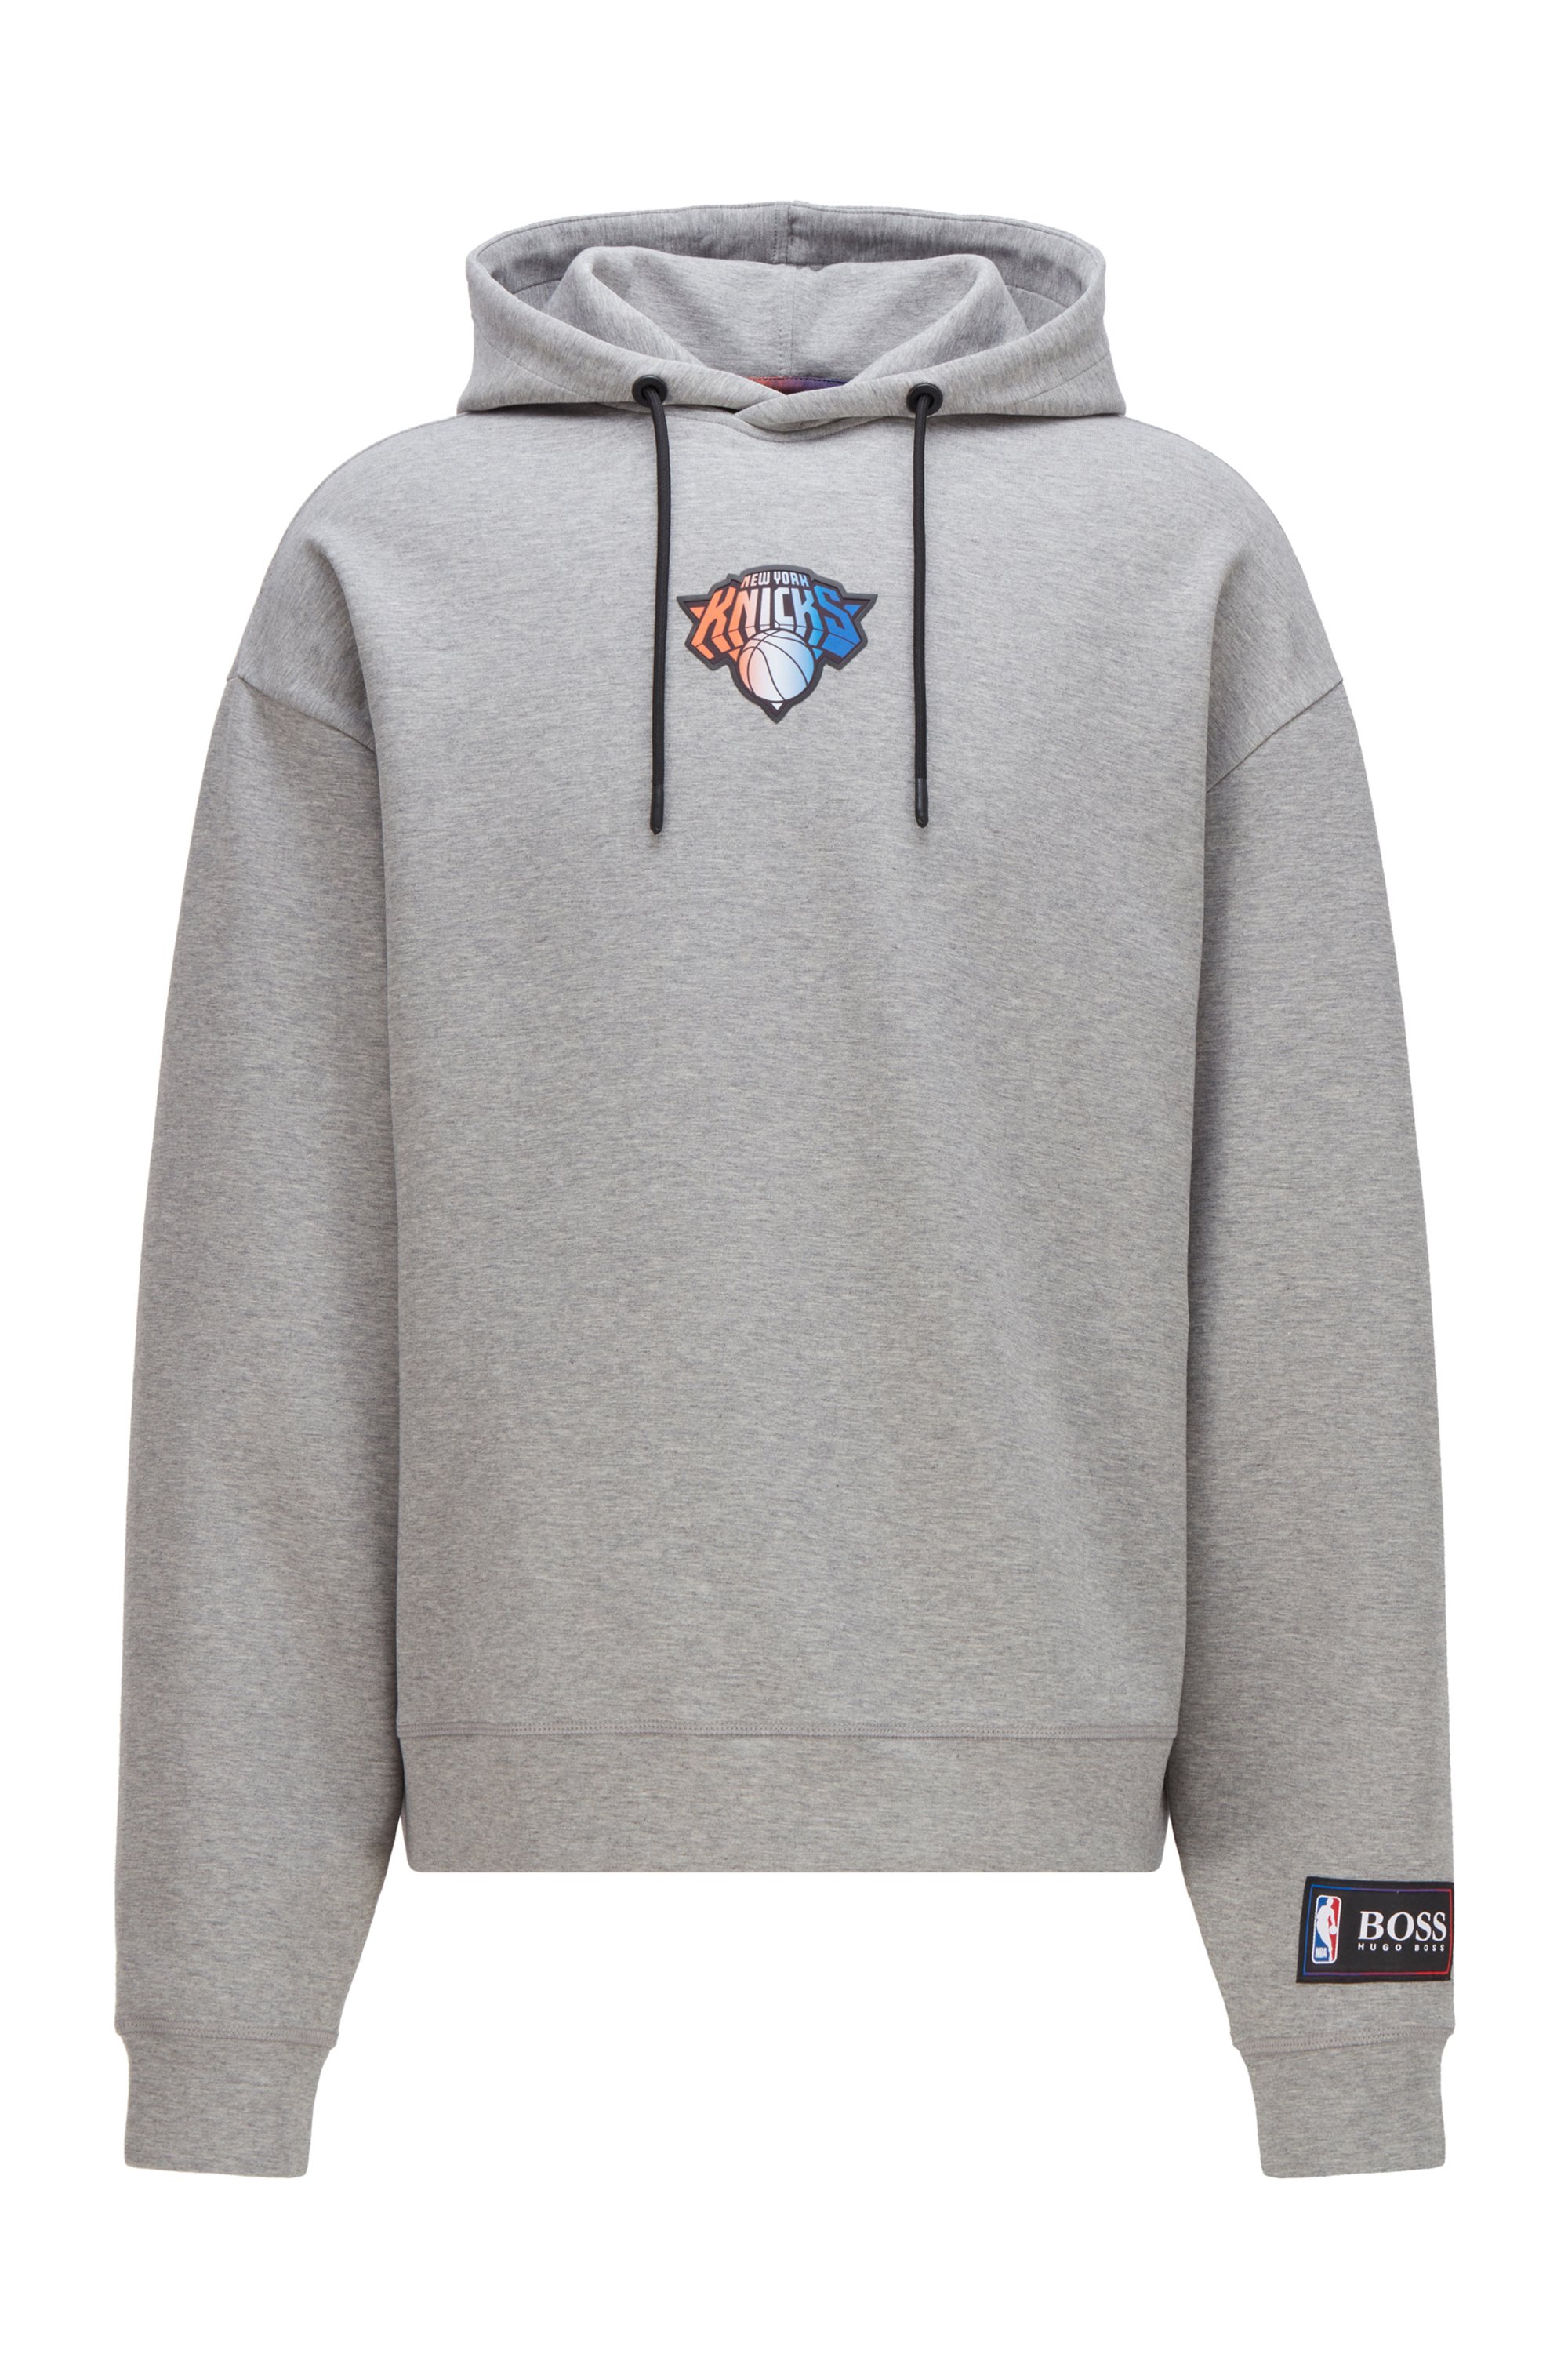 BOSS x NBA cotton-blend hoodie with coordinating logos, NBA Knicks